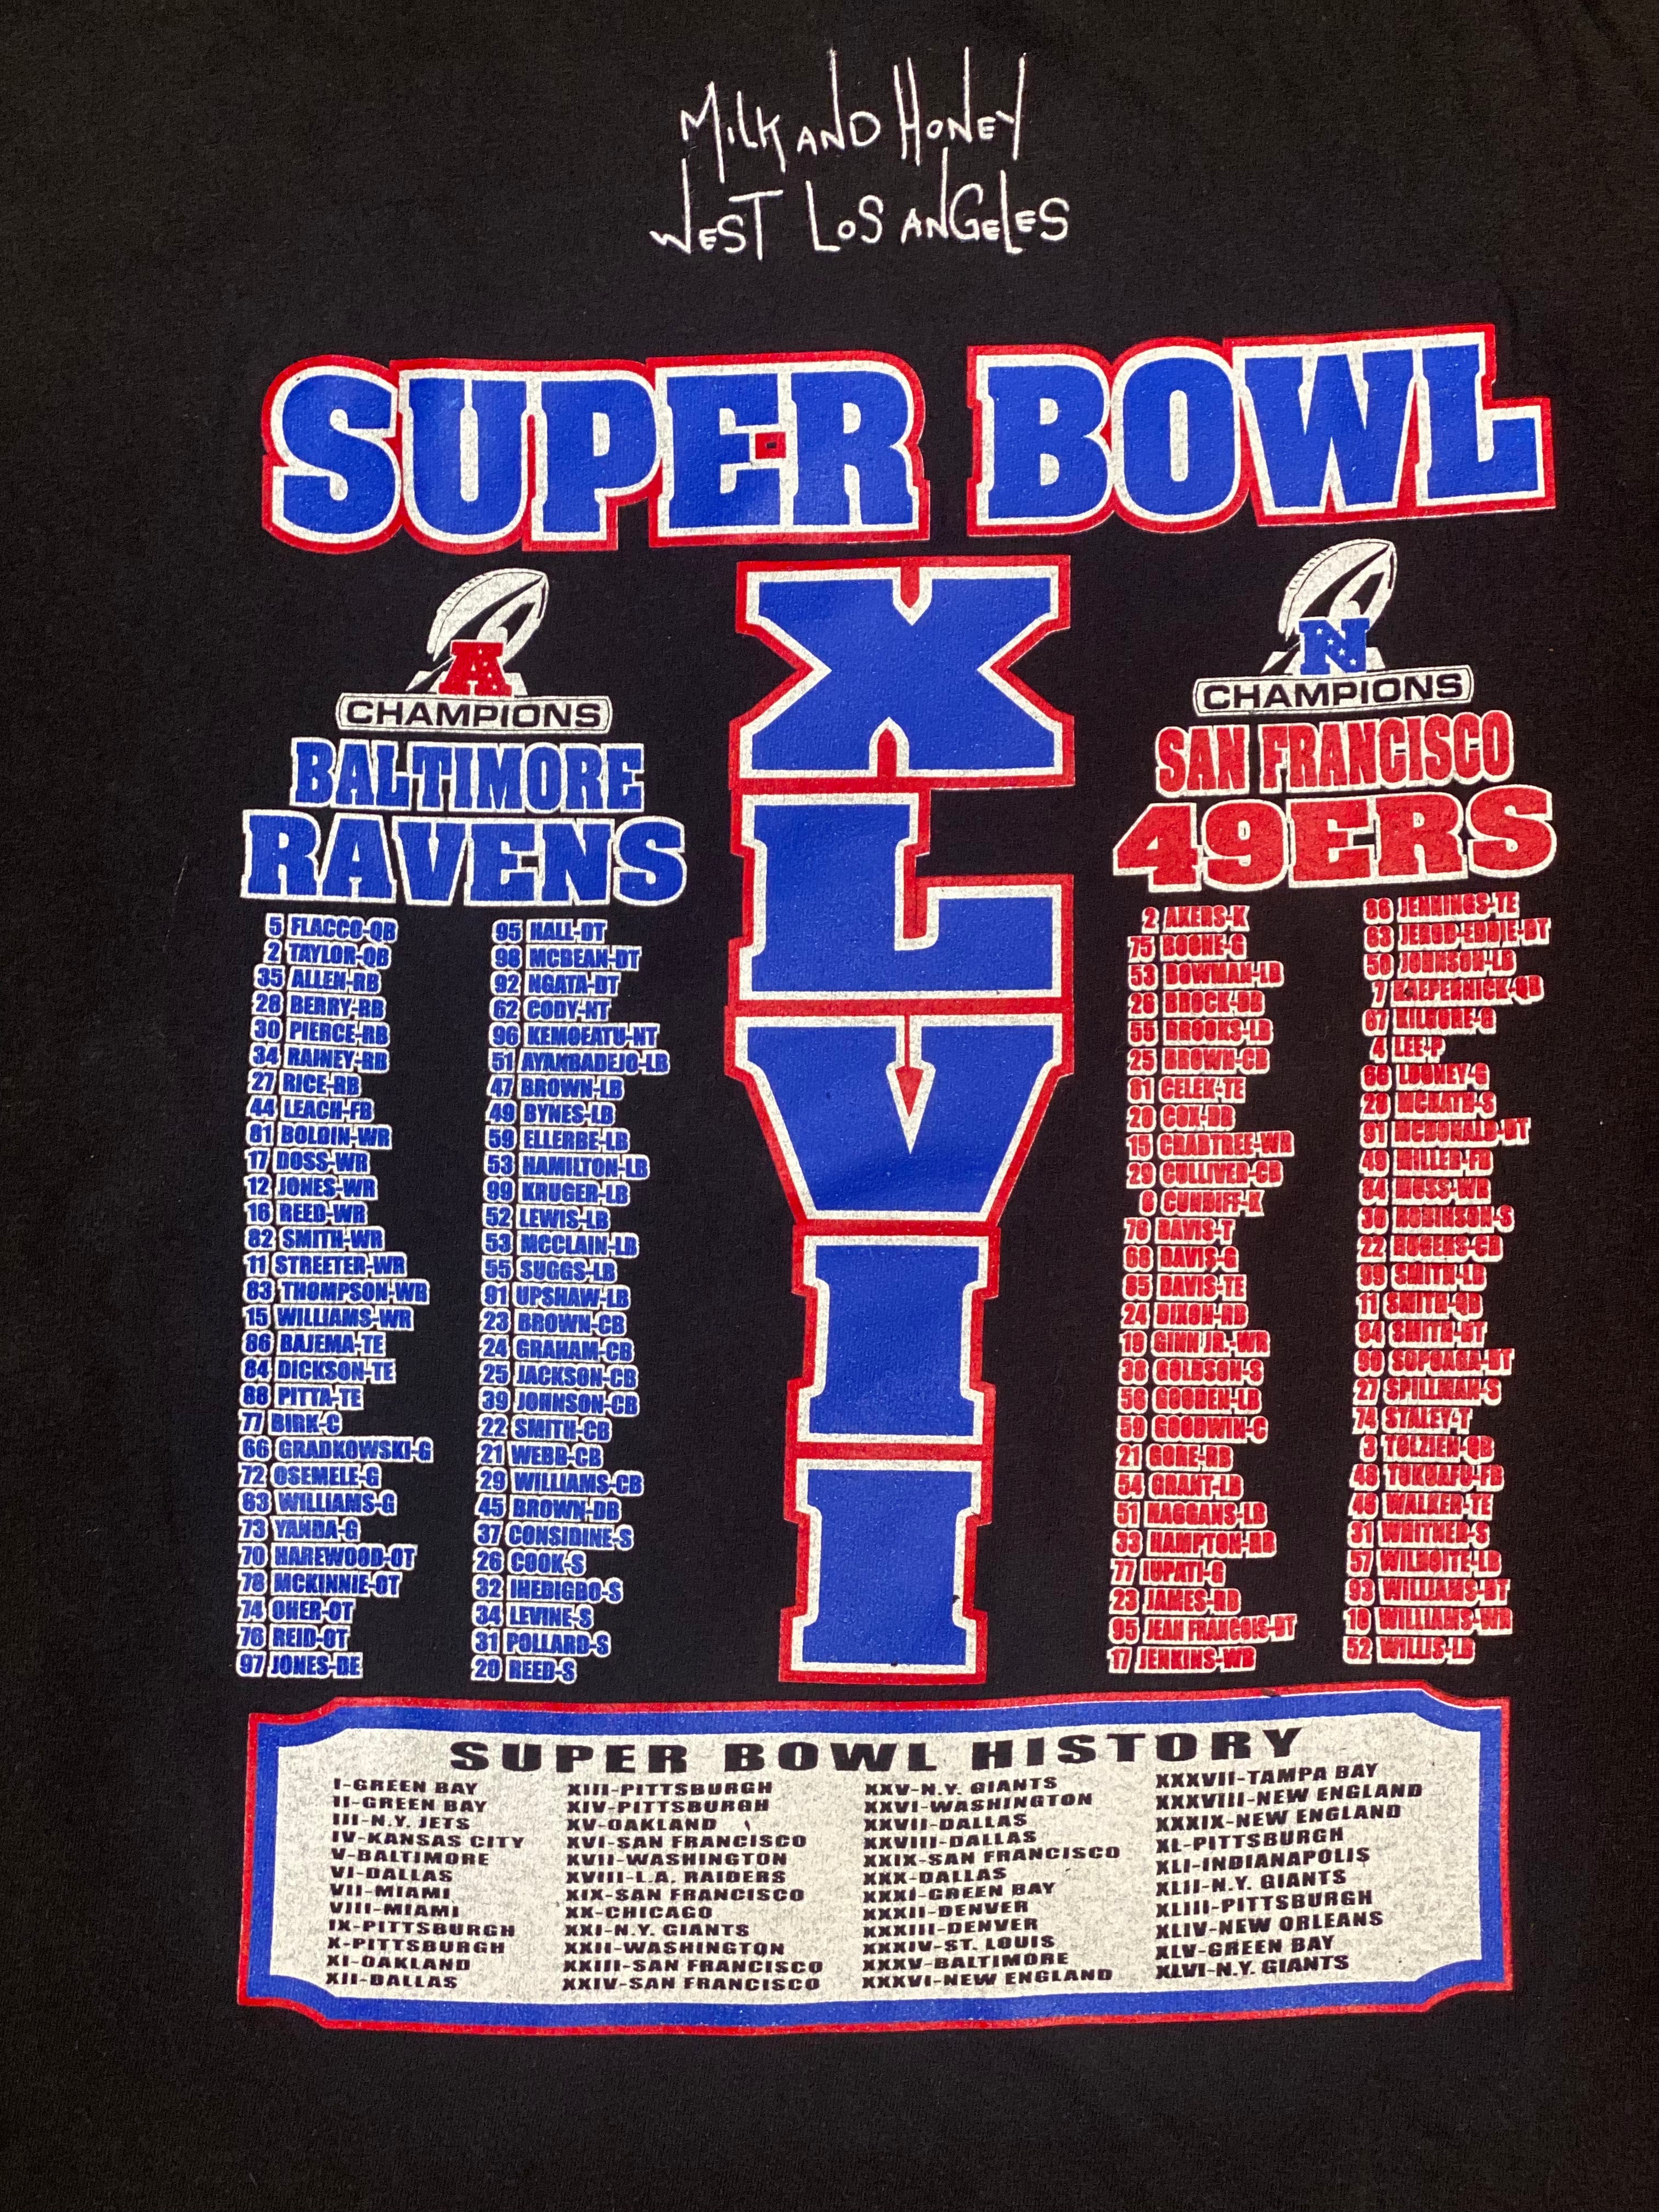 "Super Bowl XLVII" Limited Edition Vintage T-Shirt